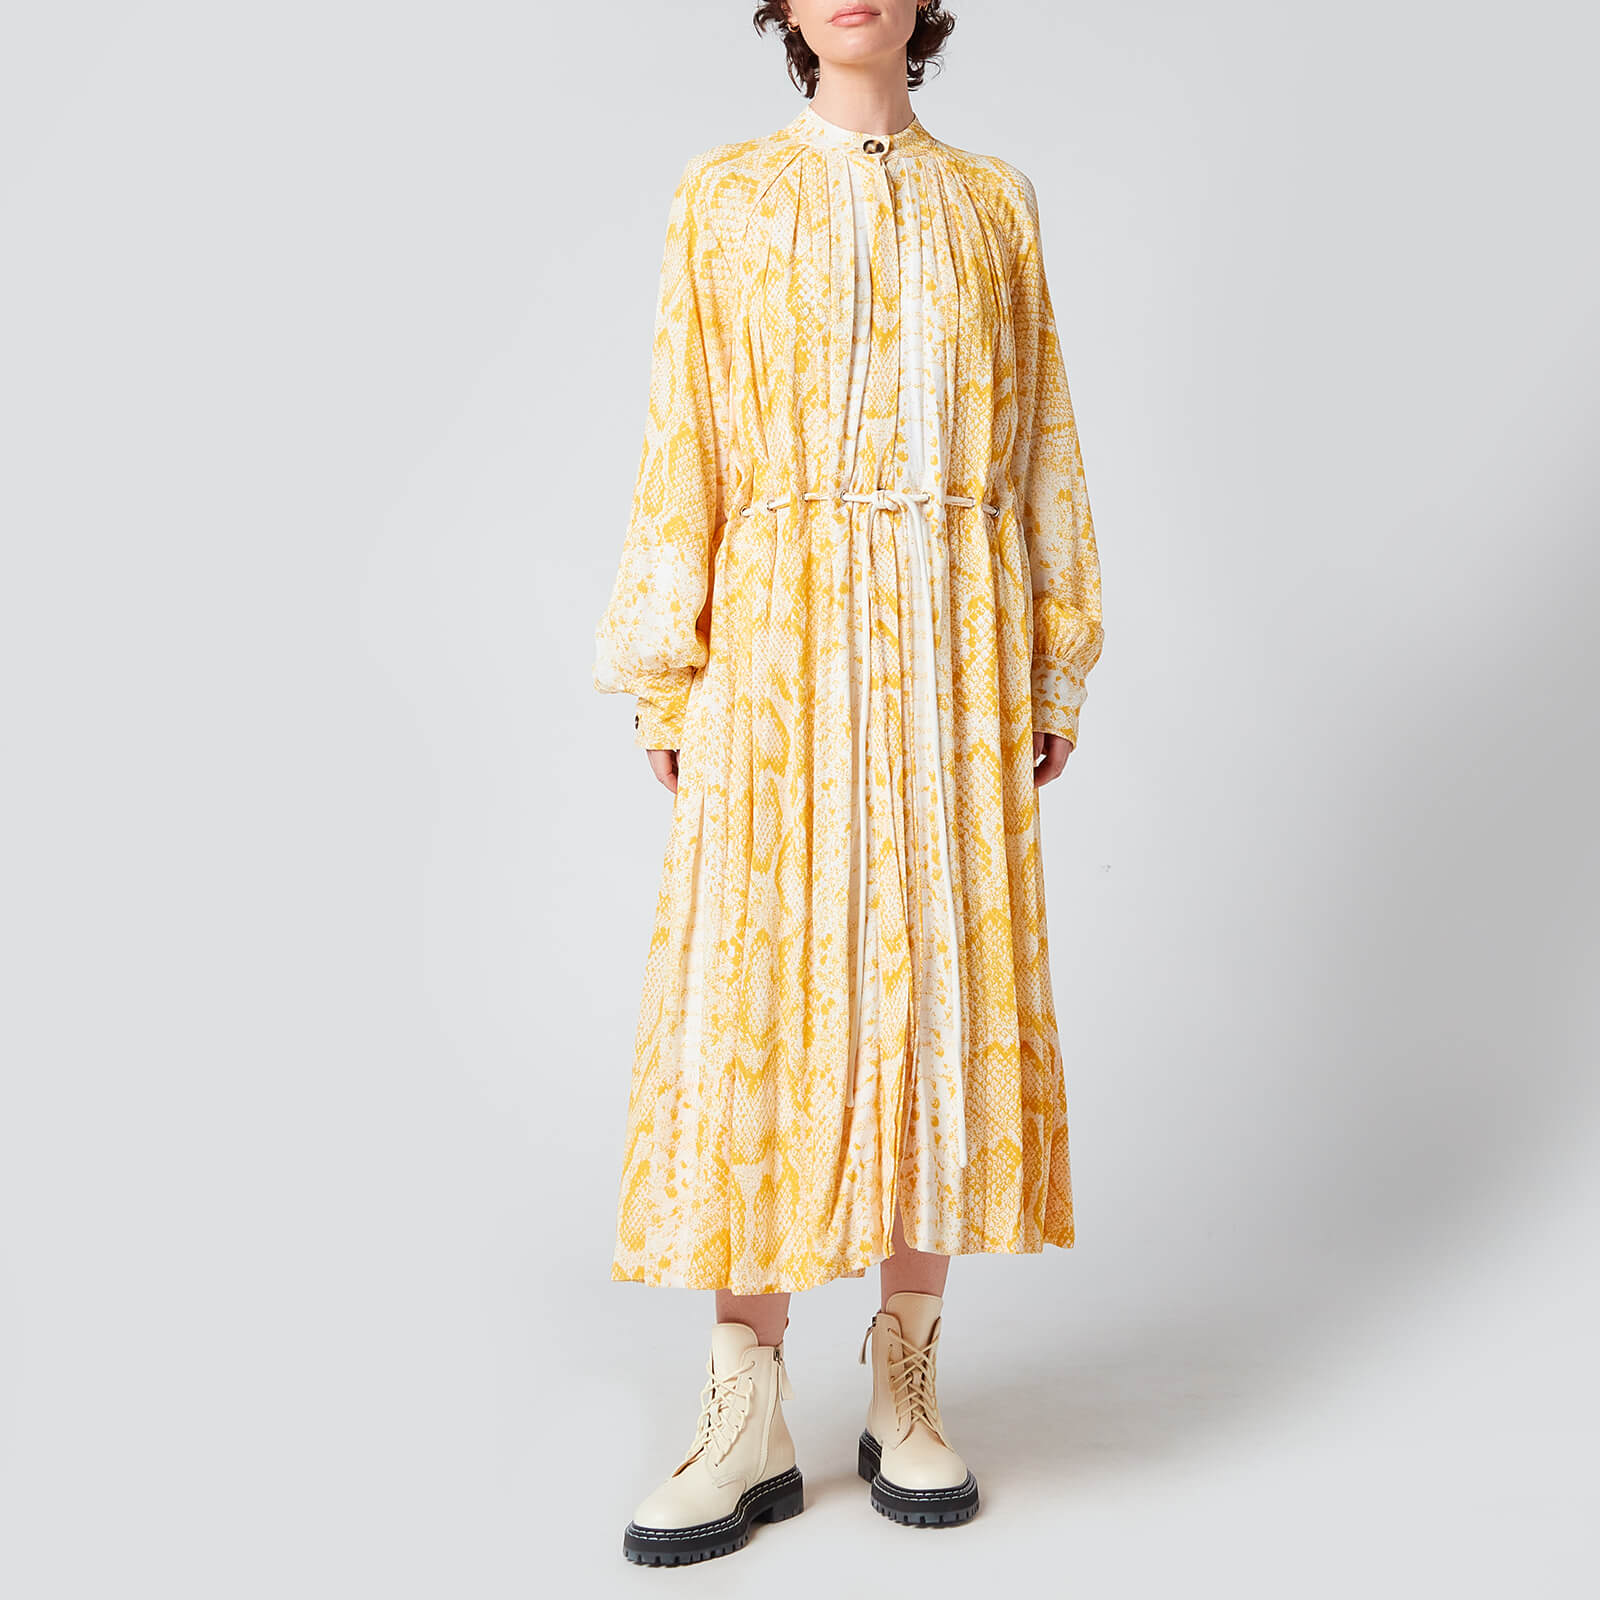 Proenza Schouler Women's Snakeprint Crepe Shirt Dress - Yellow Multi - US 8/UK 12